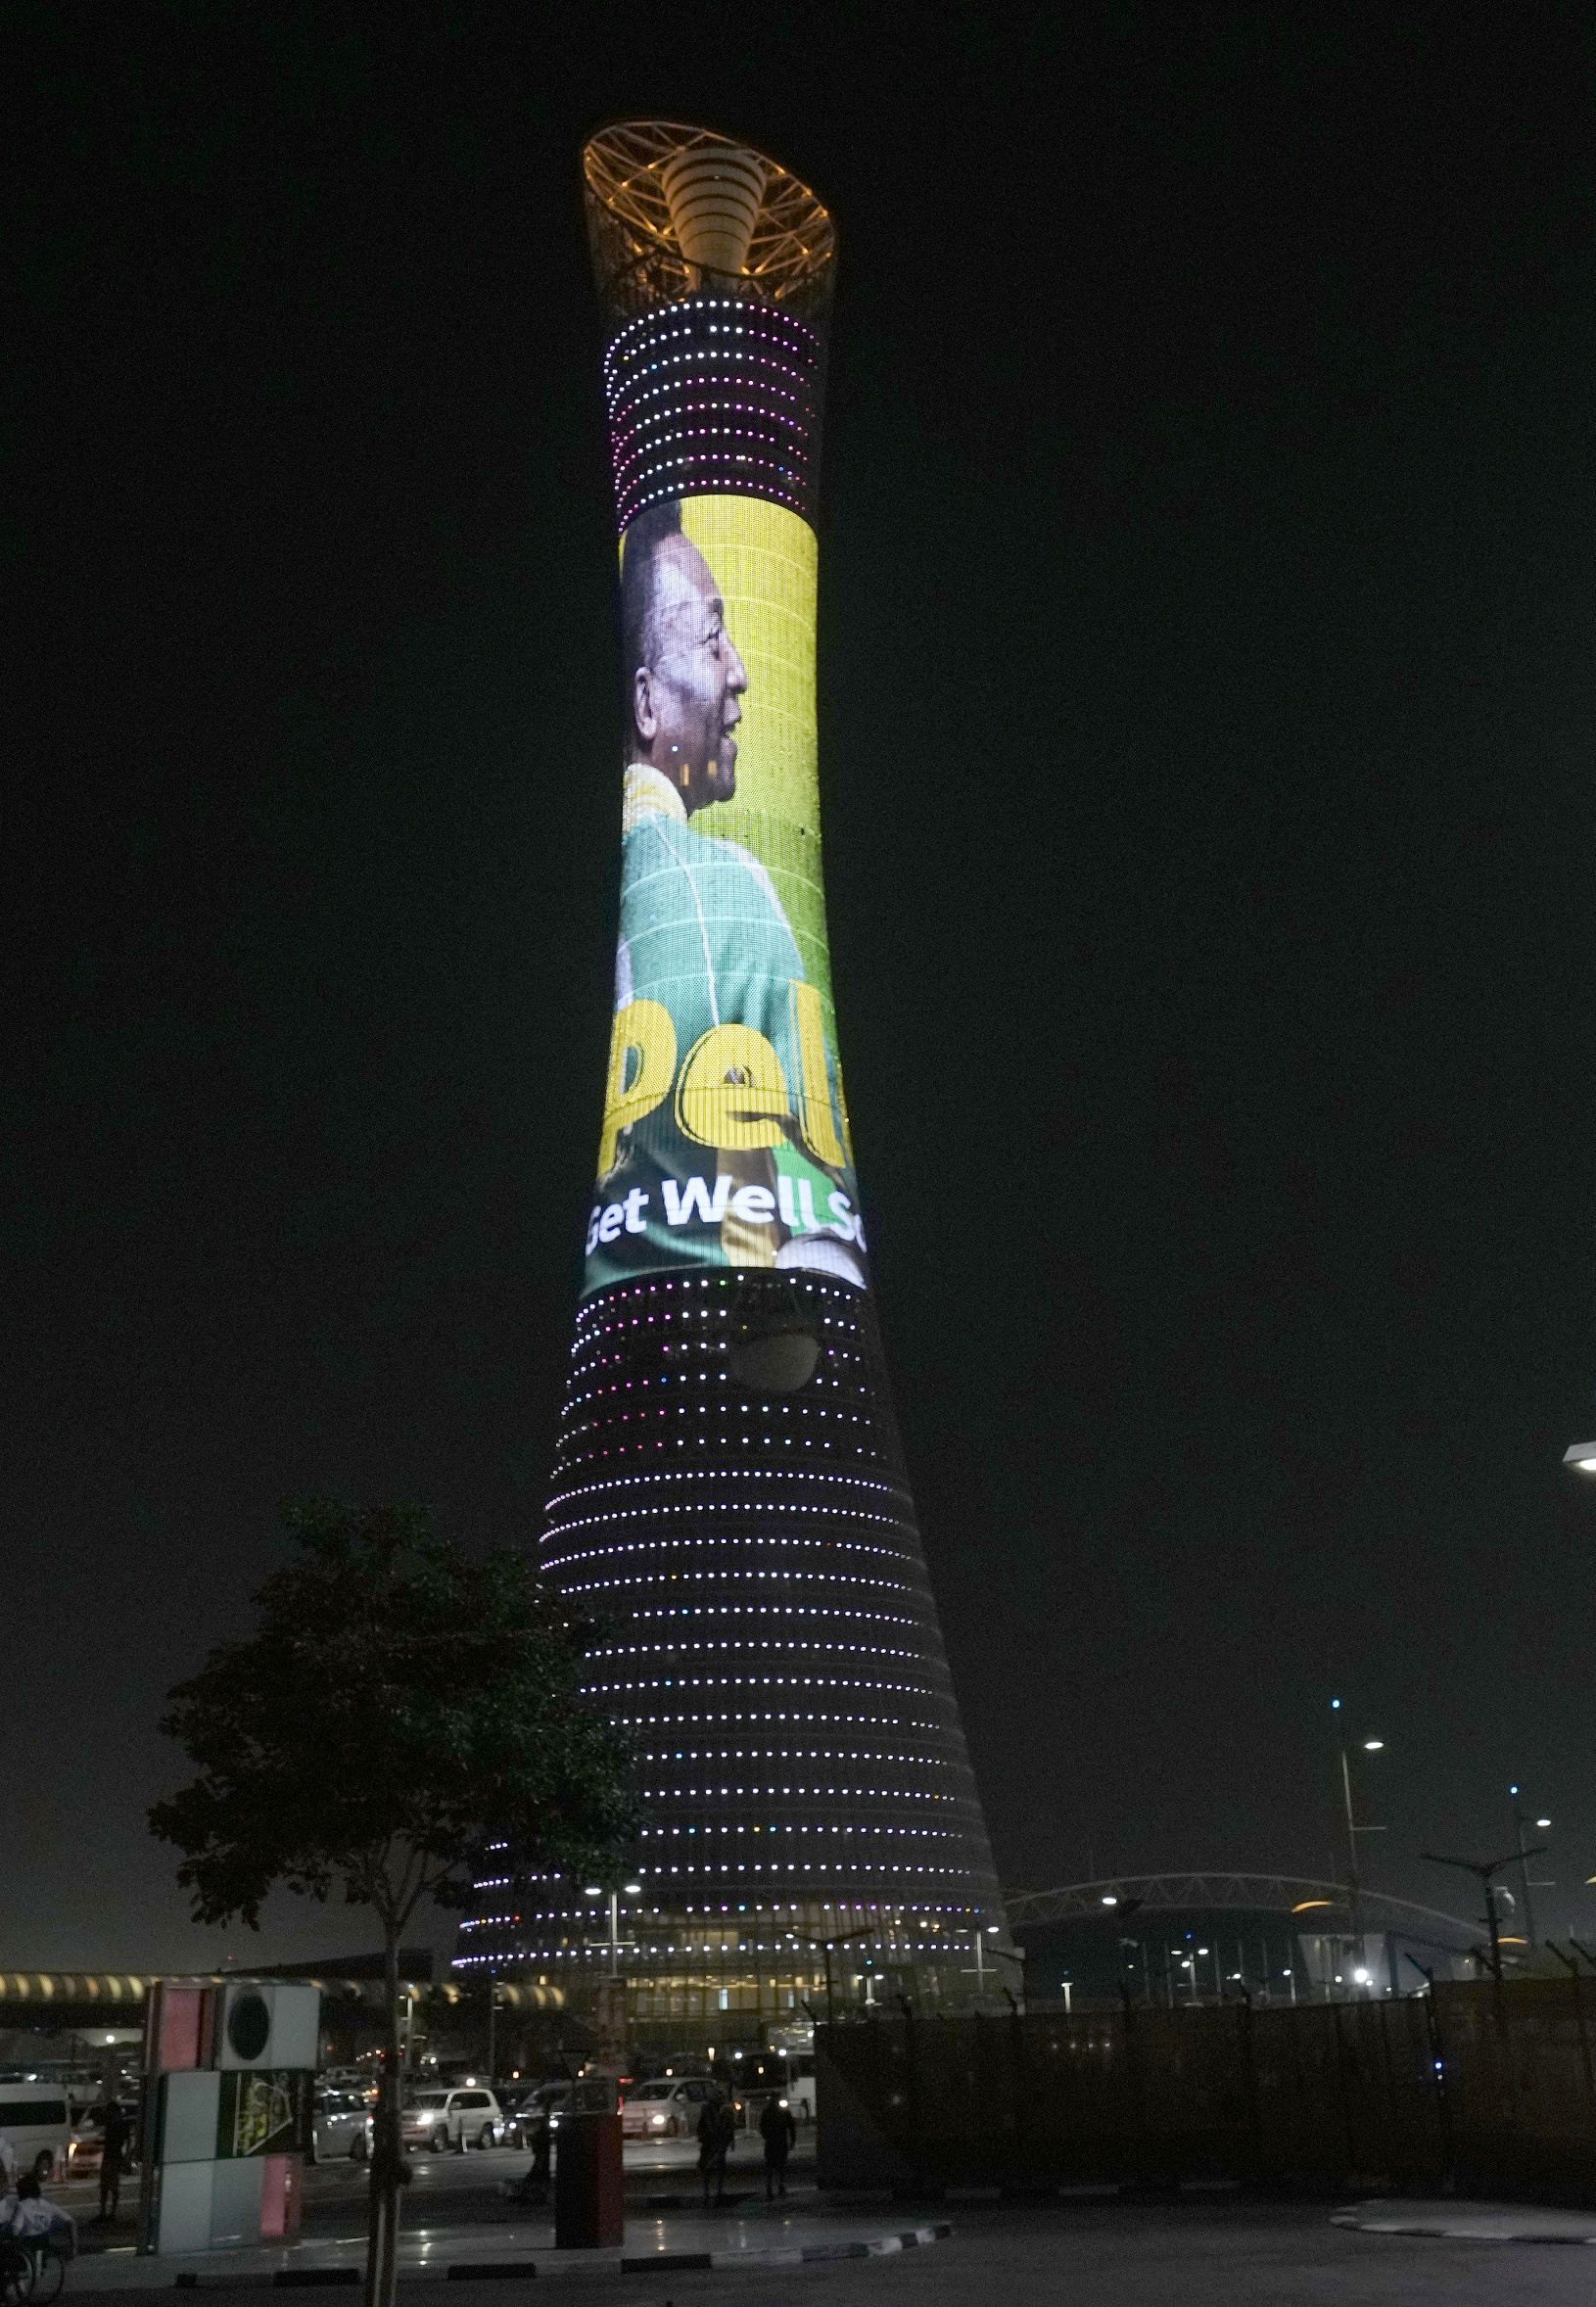 Katarčania vyjadrili podporu Pelému